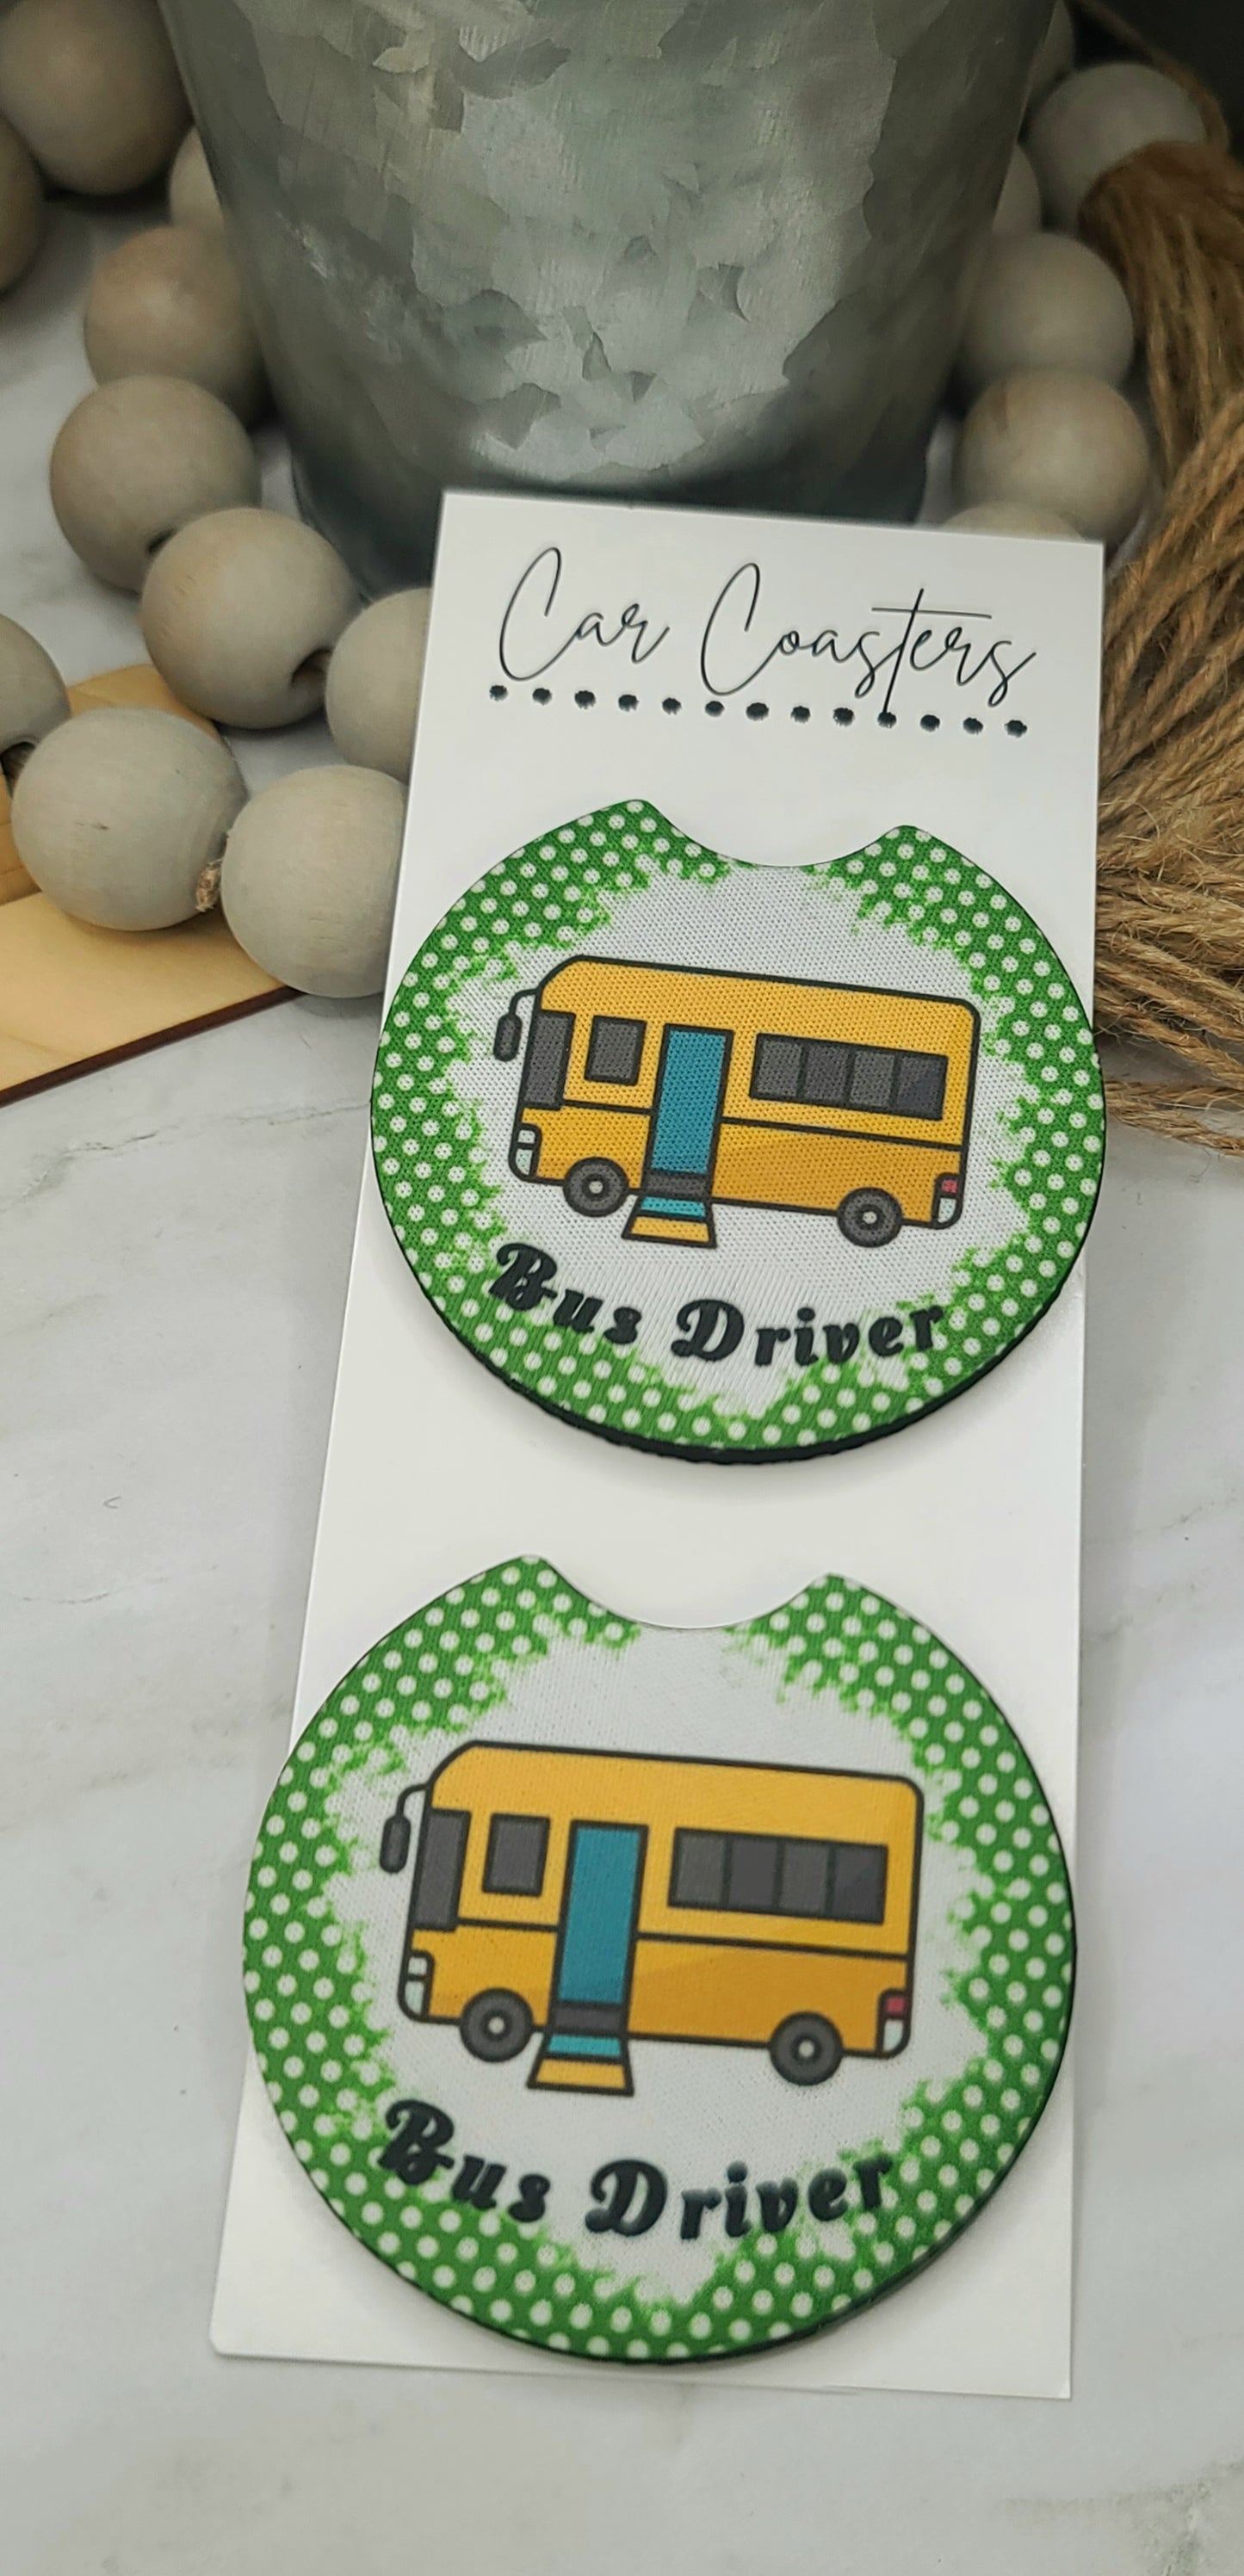 Bus Driver Car Coasters